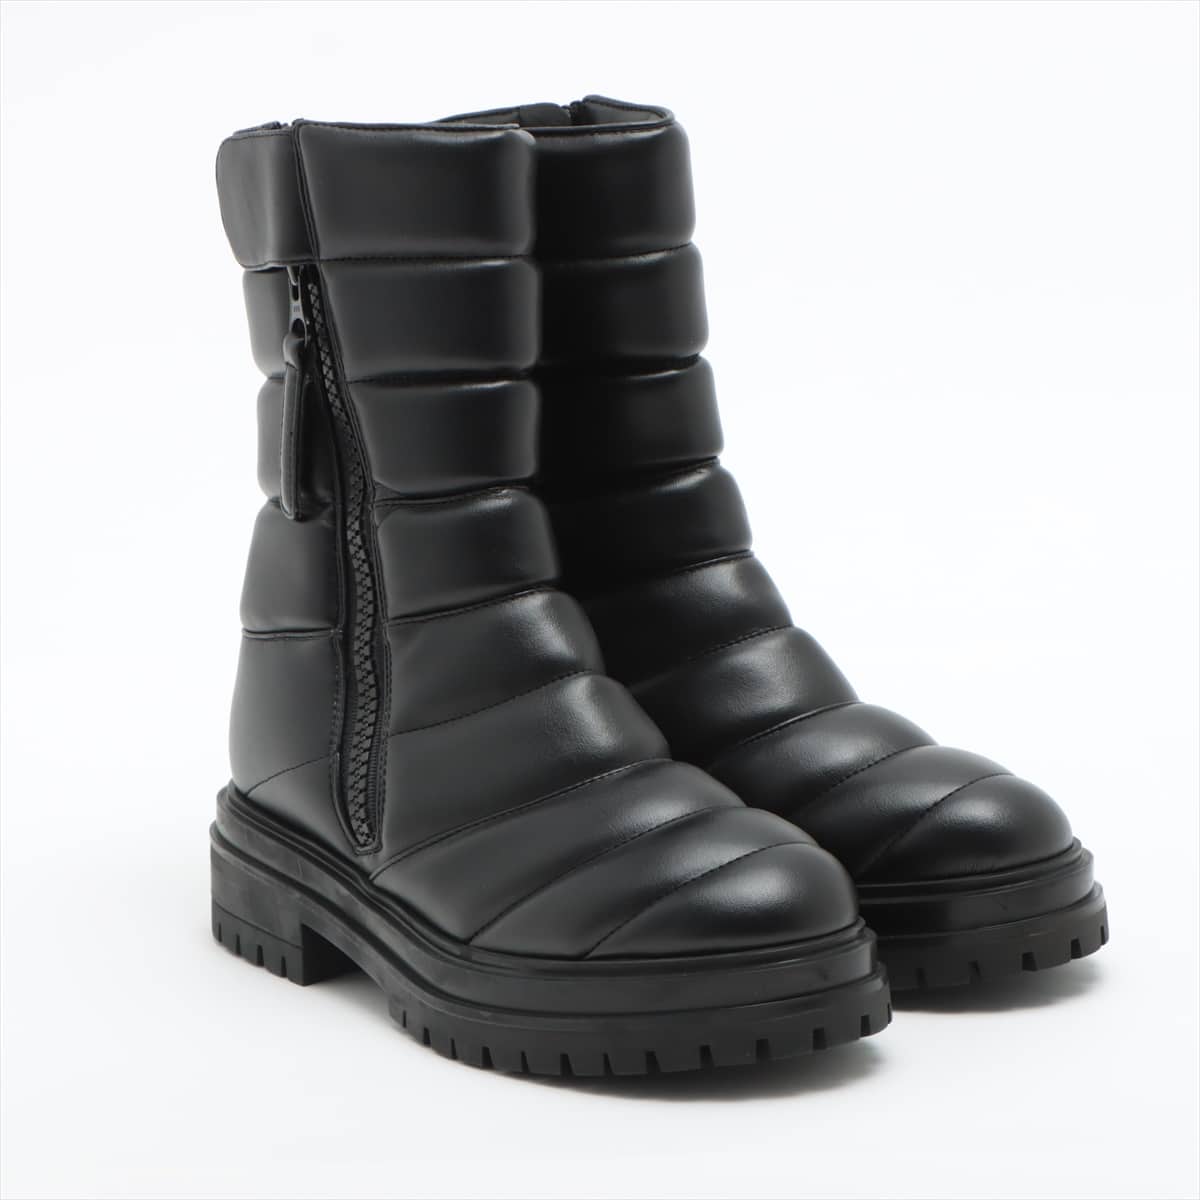 Gianvito Rossi leatherette Boots 36 1/2 Ladies' Black